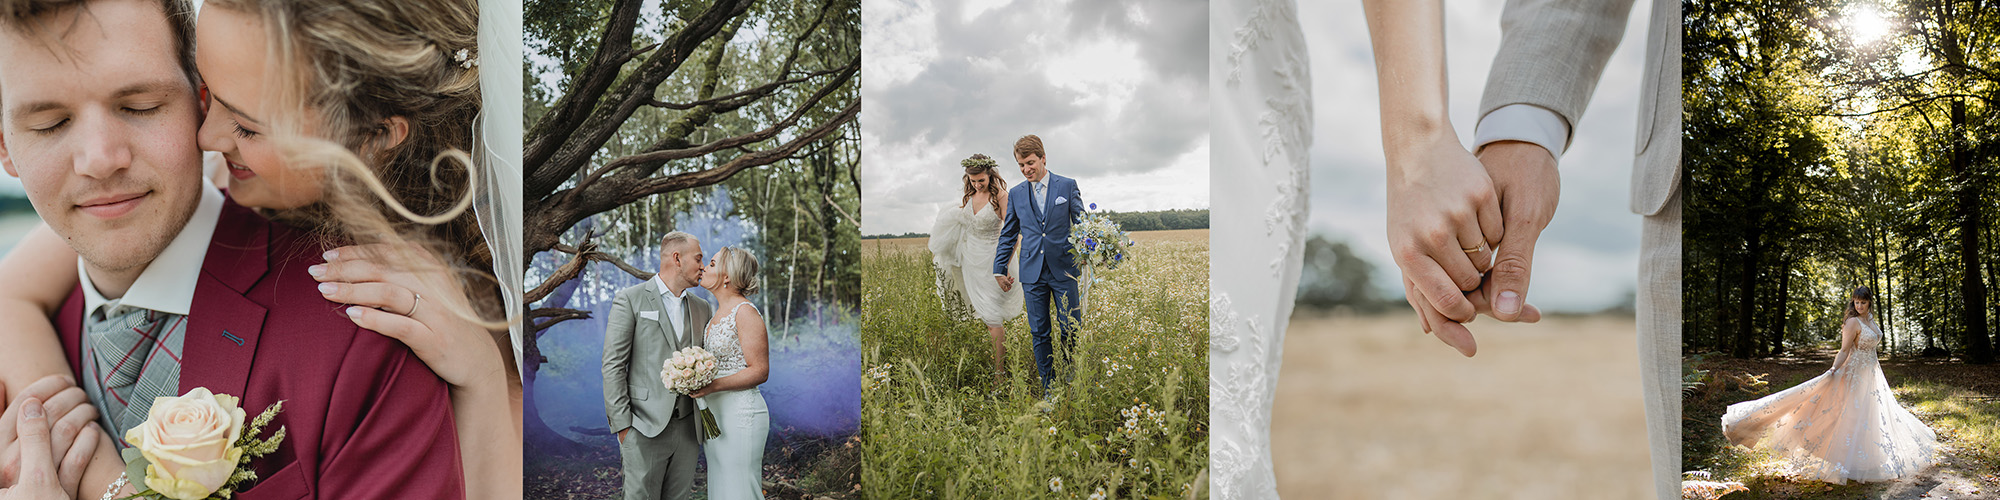 minke kroeze bruidsfotografie trouwfotografie trouwreportage drenthe